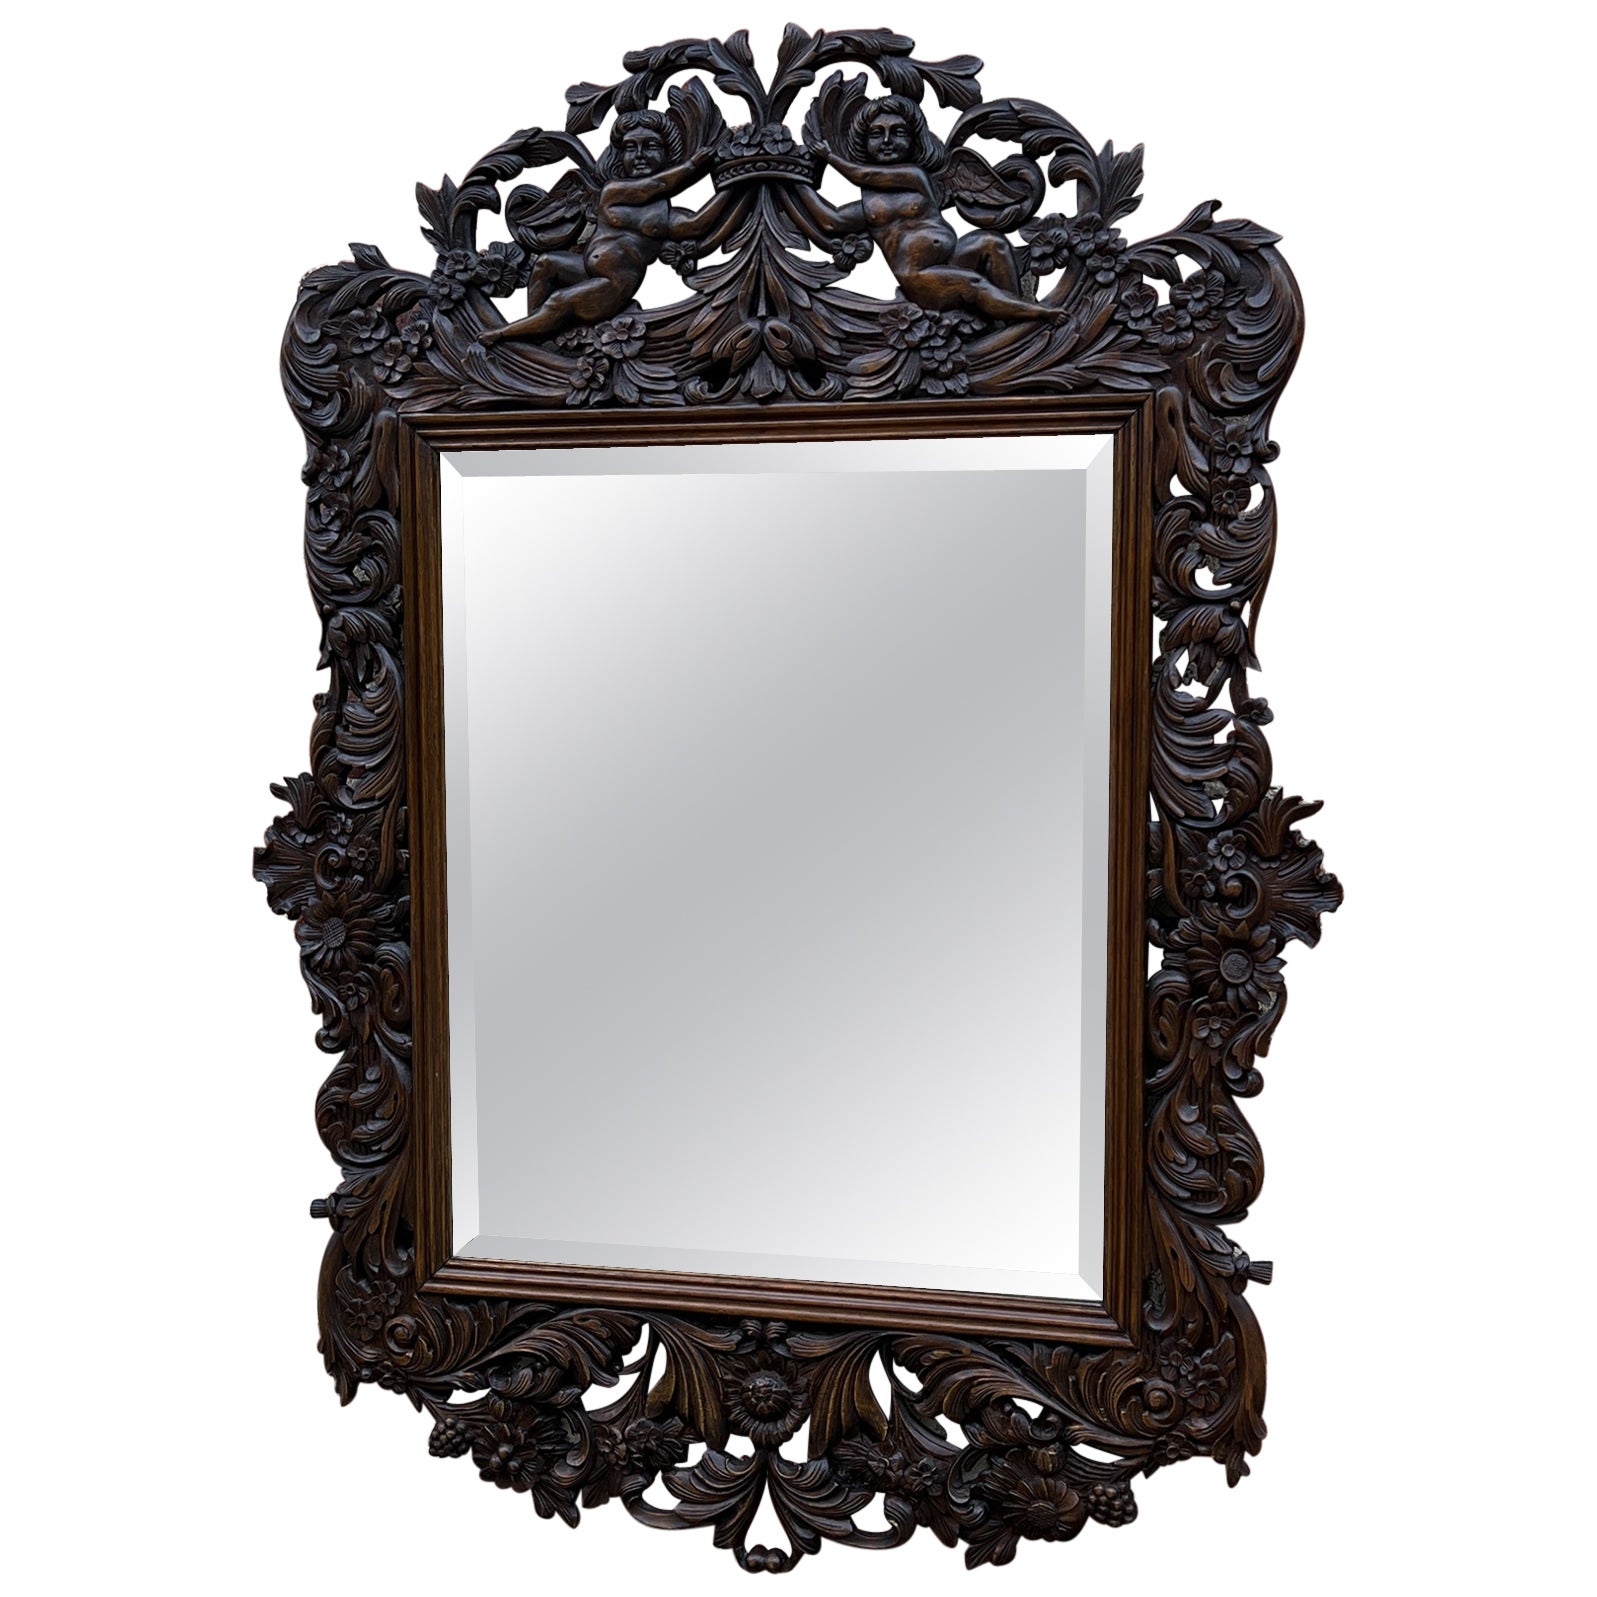 Antique French Mirror Framed Hanging Wall Mirror Cherubs Beveled Rectangular Oak For Sale